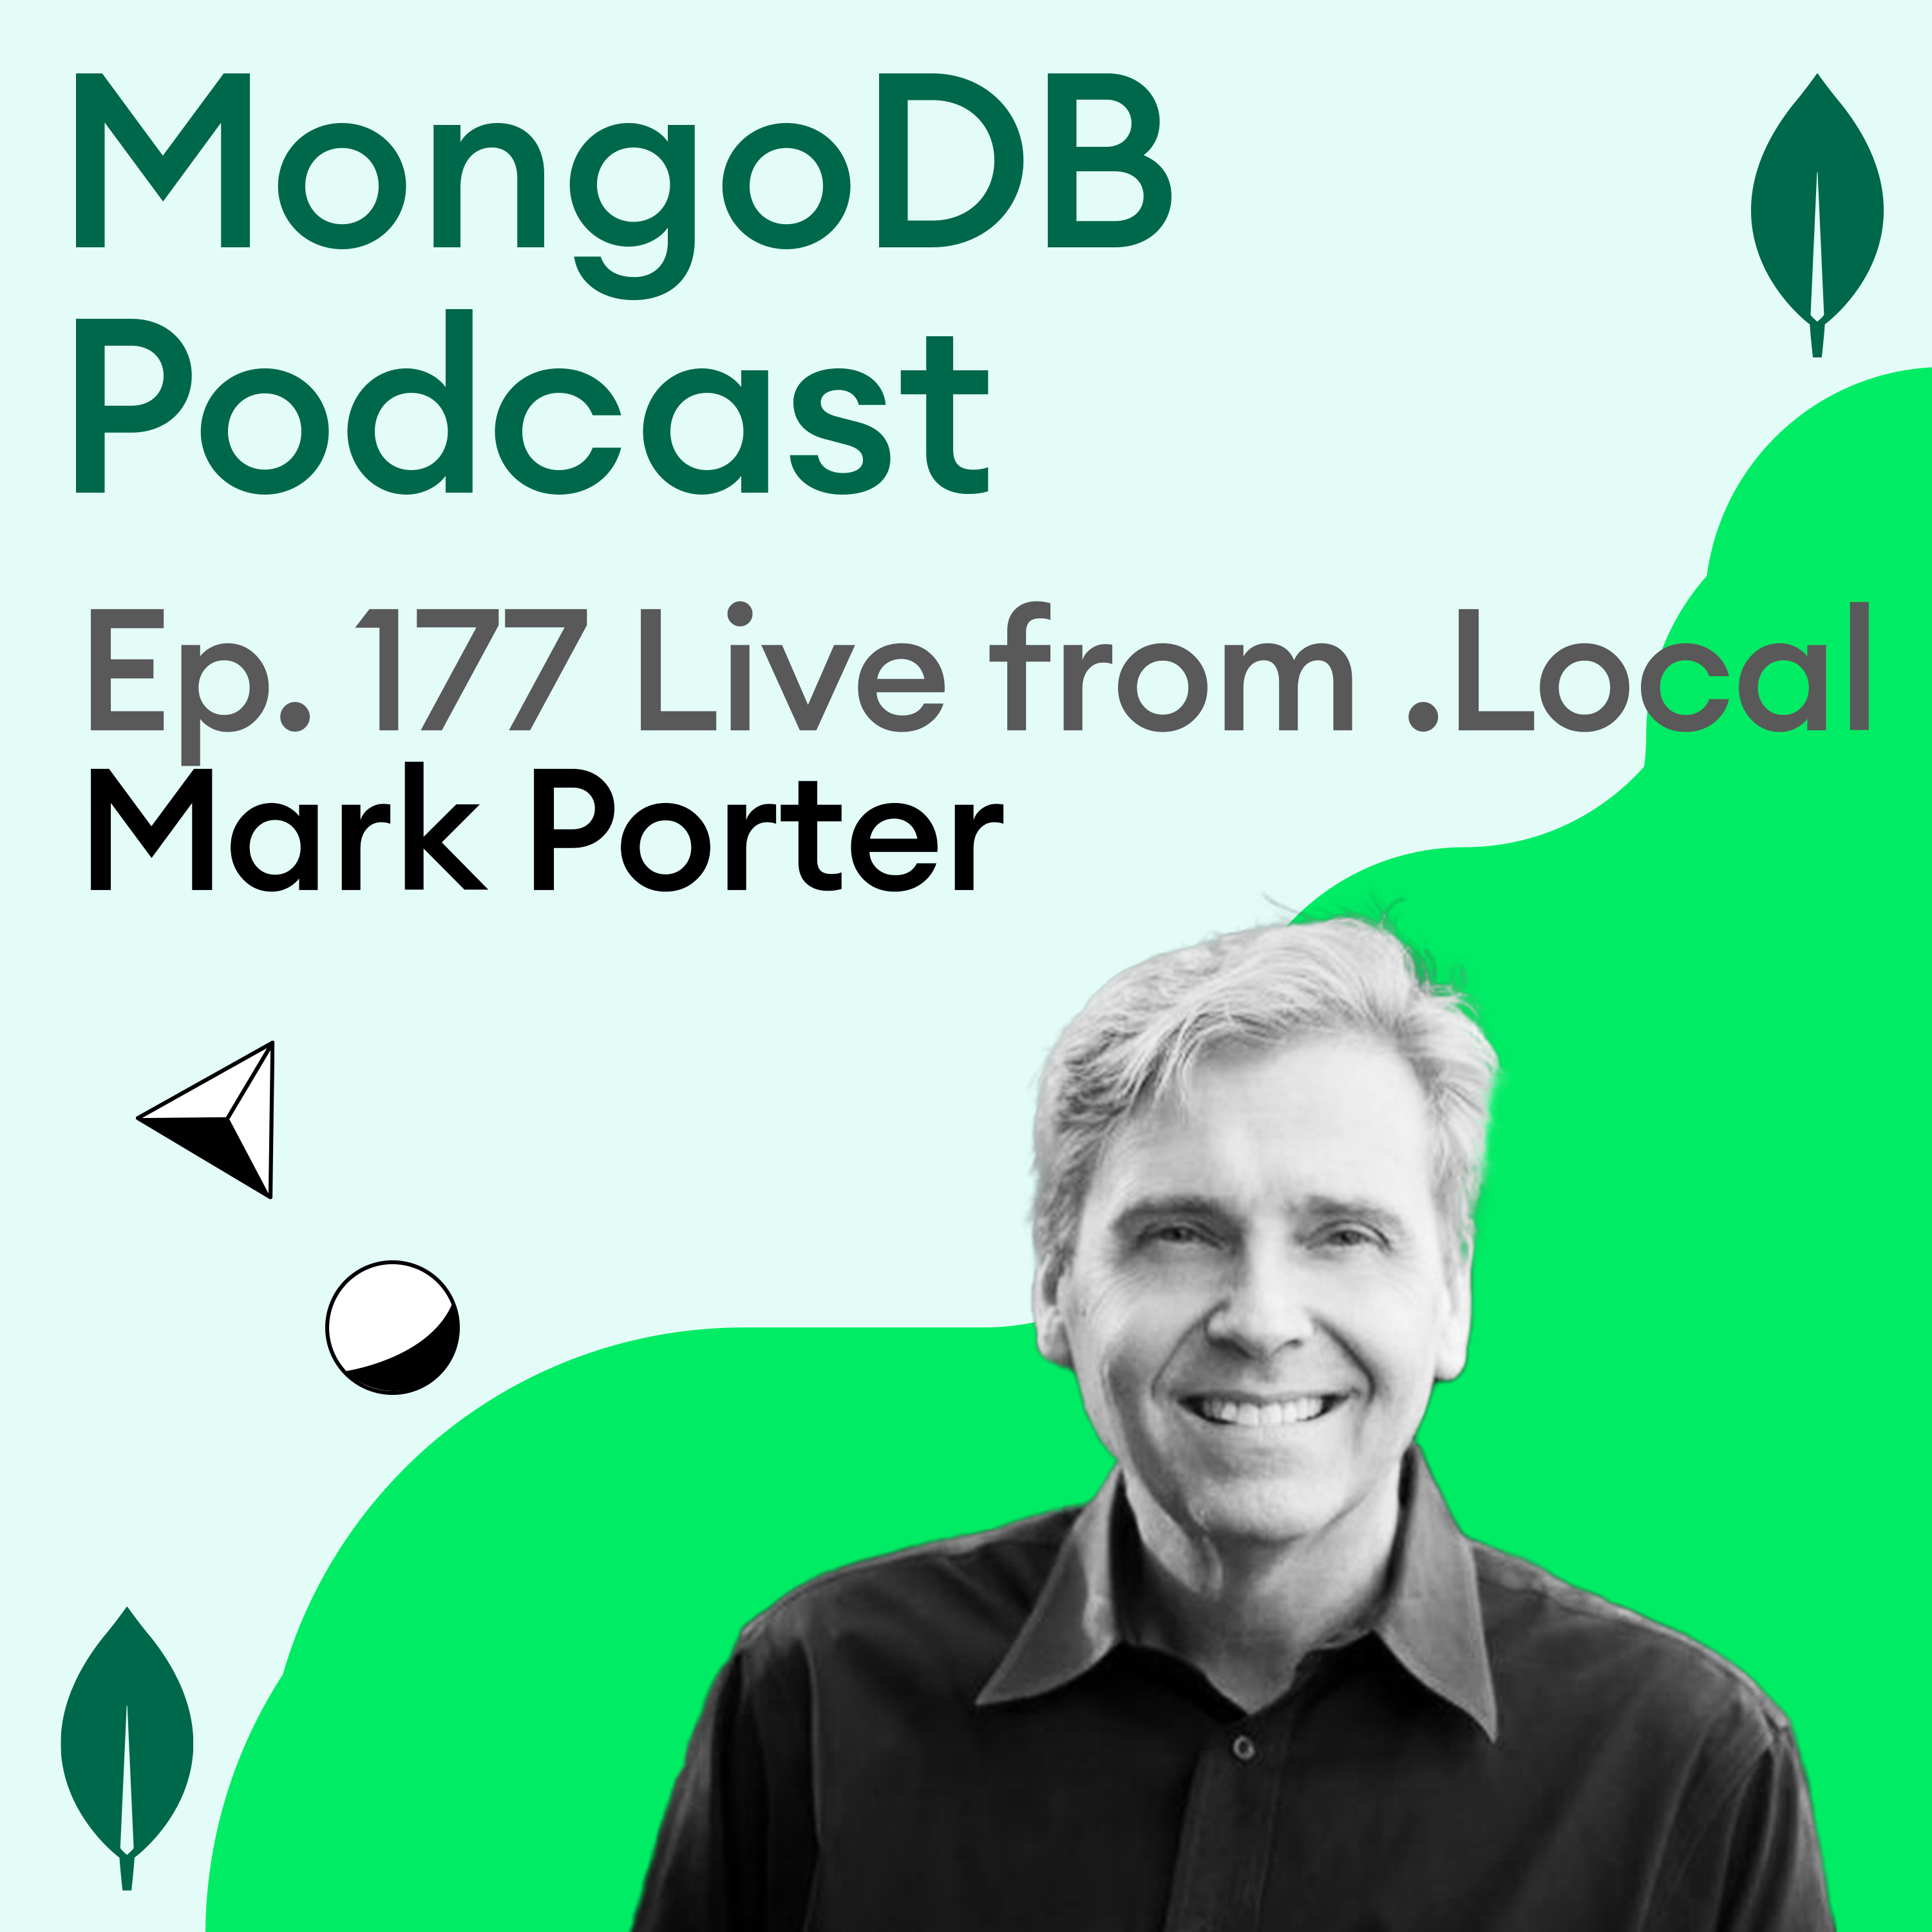 Ep. 177 The Developer's Journey with Mark Porter